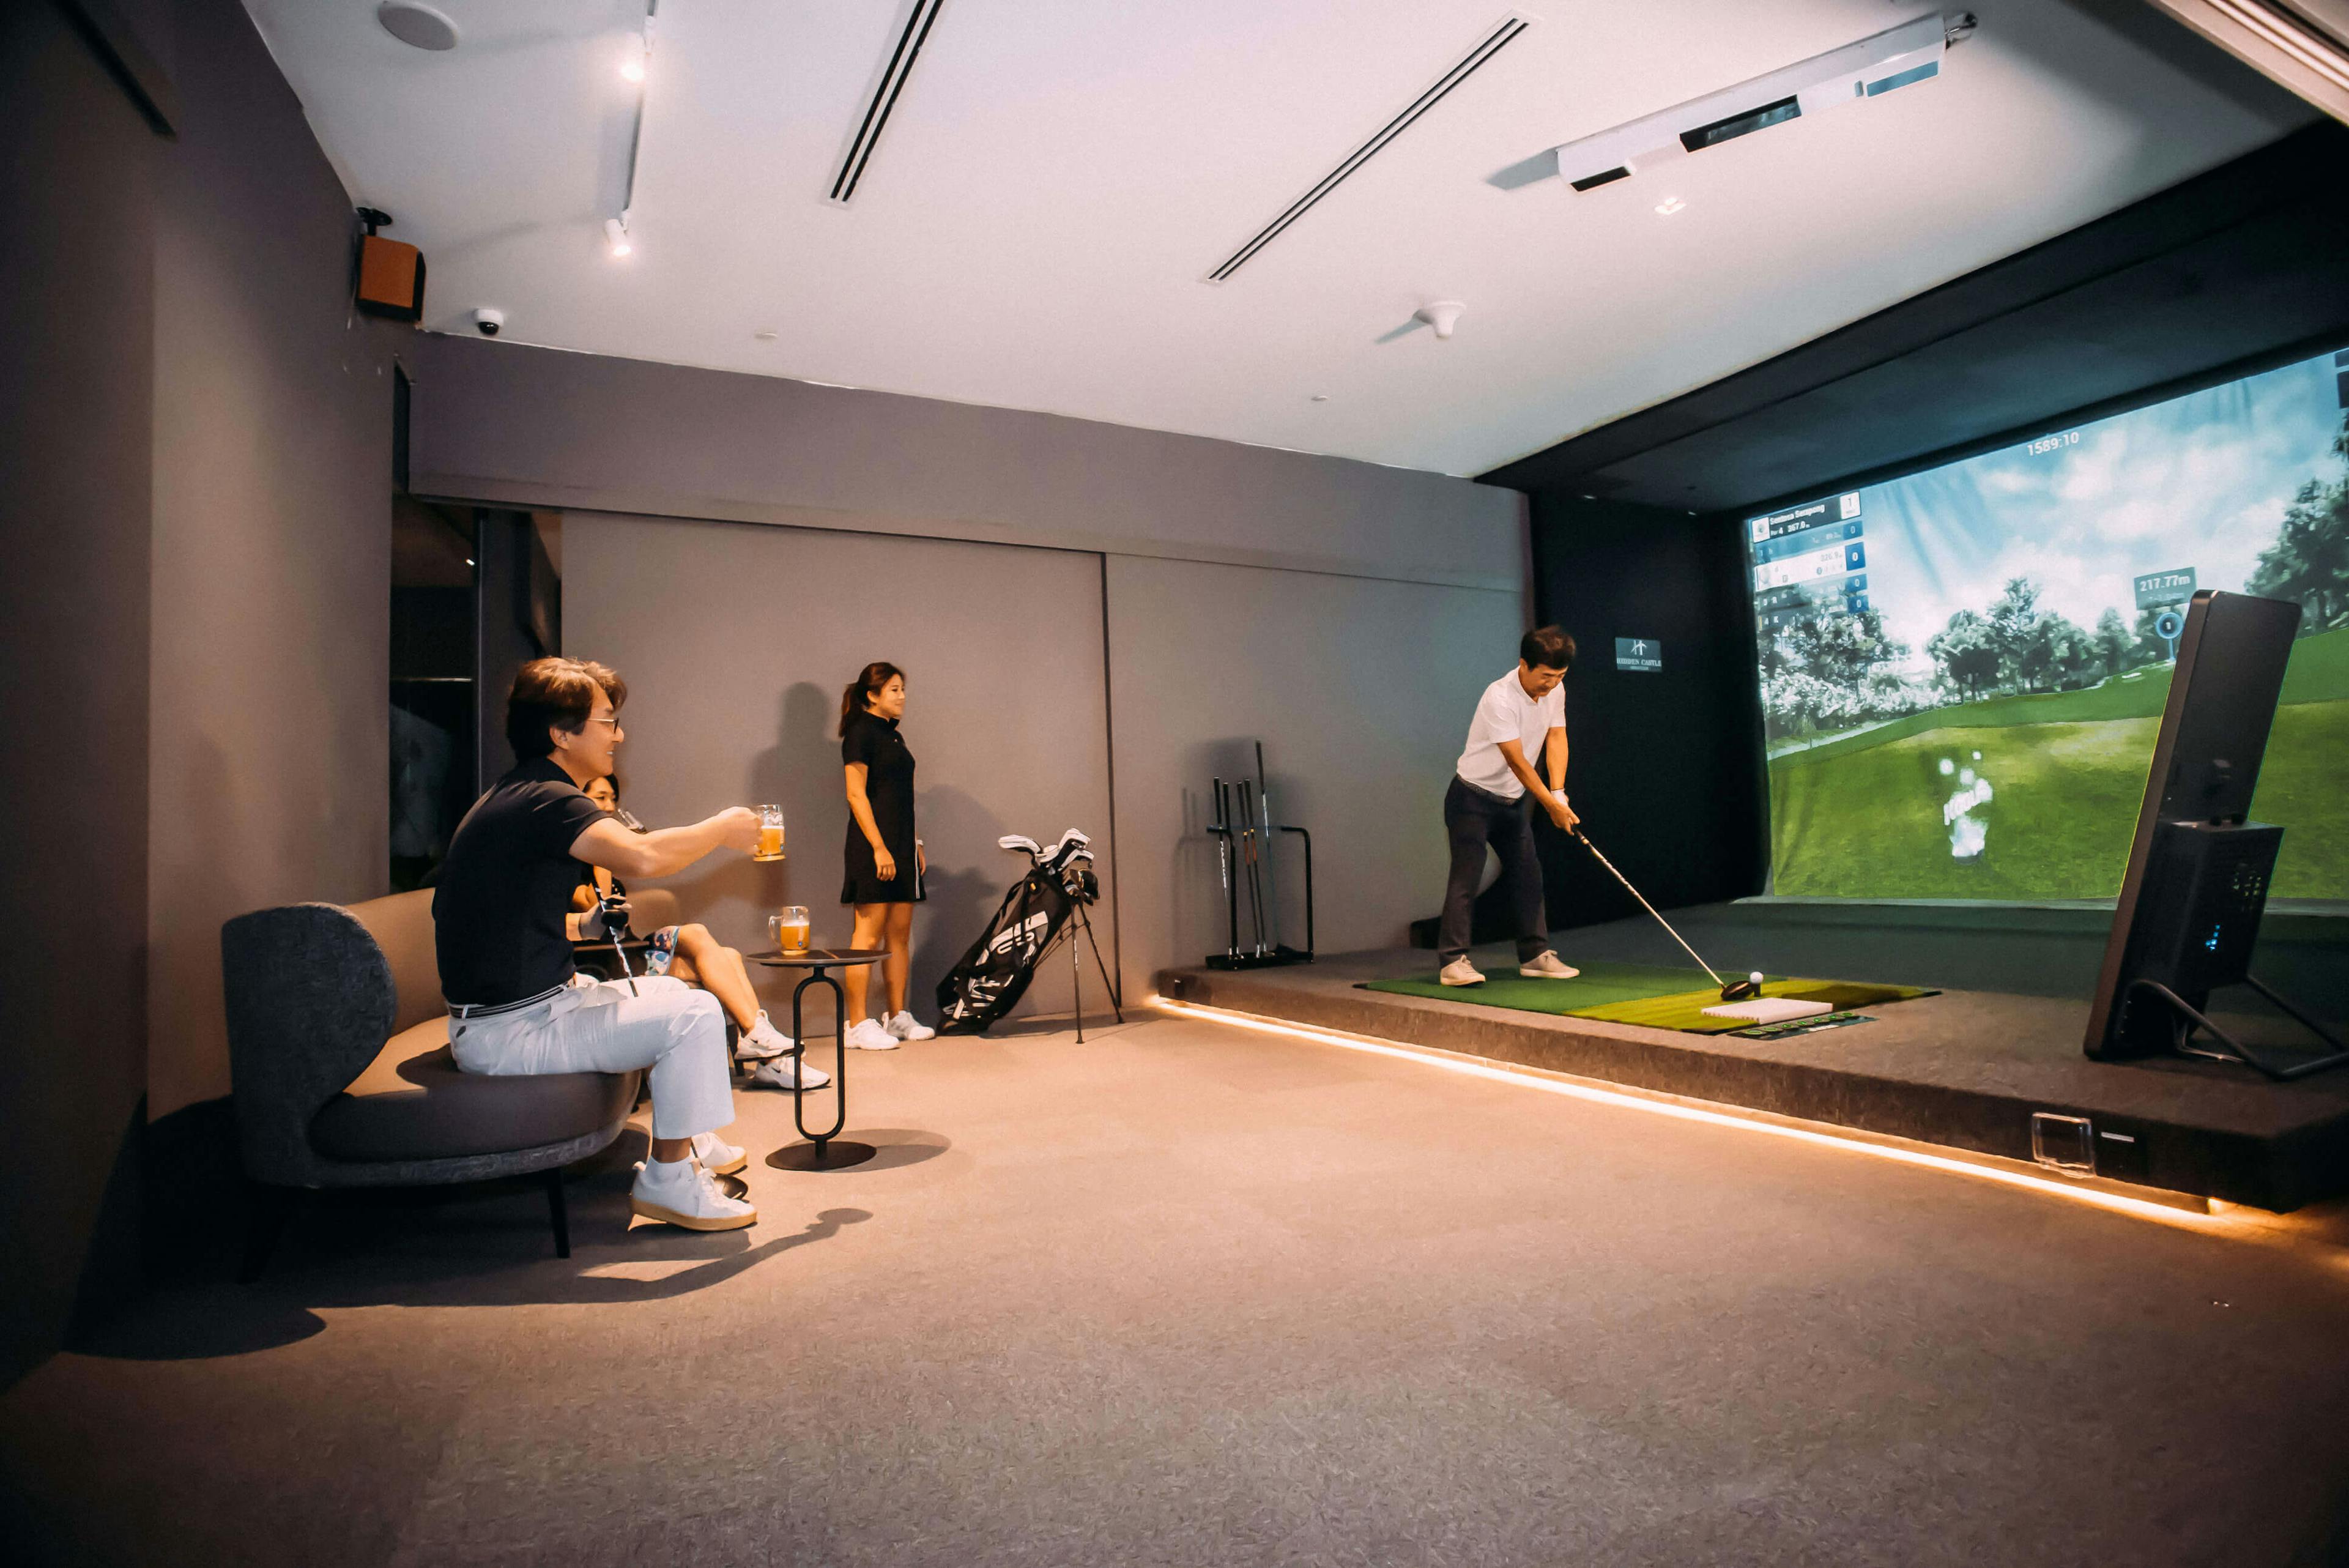 next generation of golf simulator